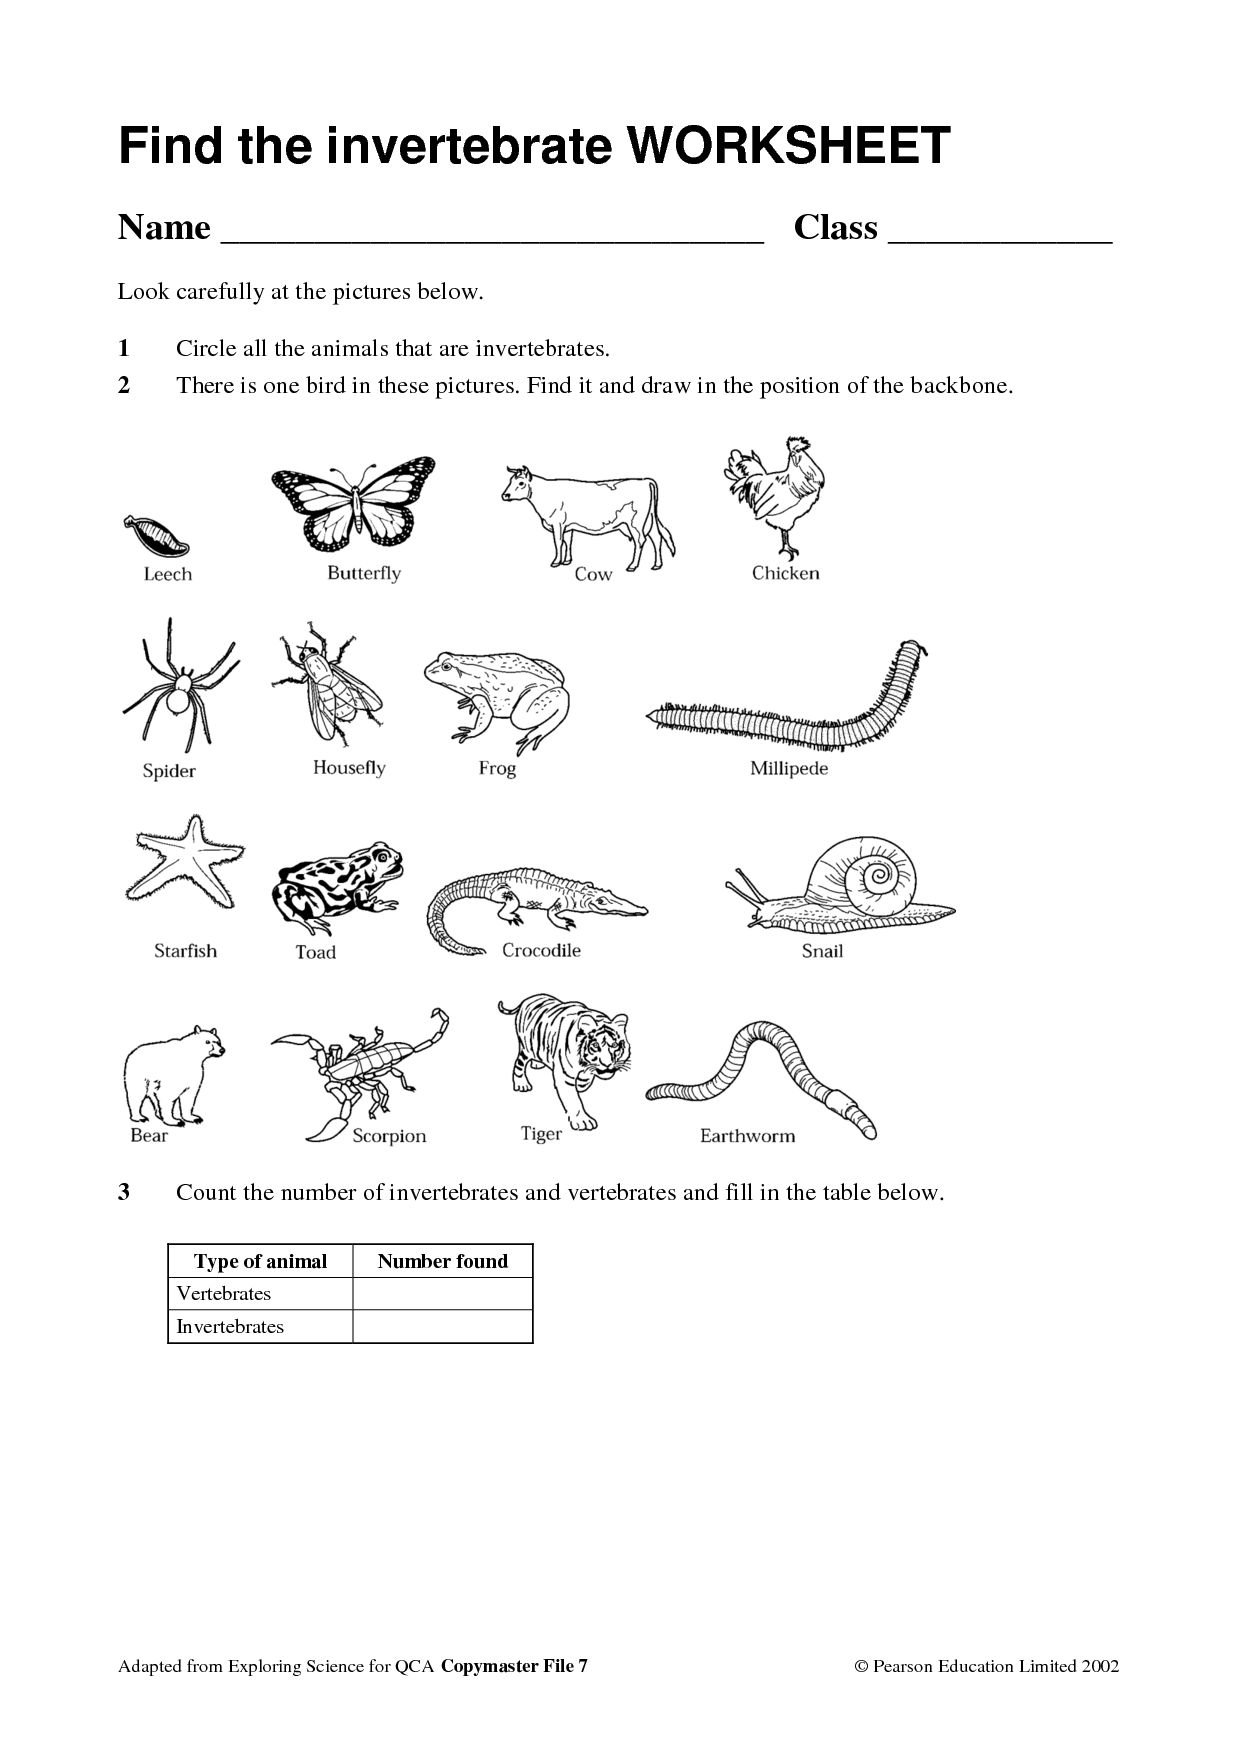 Vertebrates and Invertebrates Worksheets 